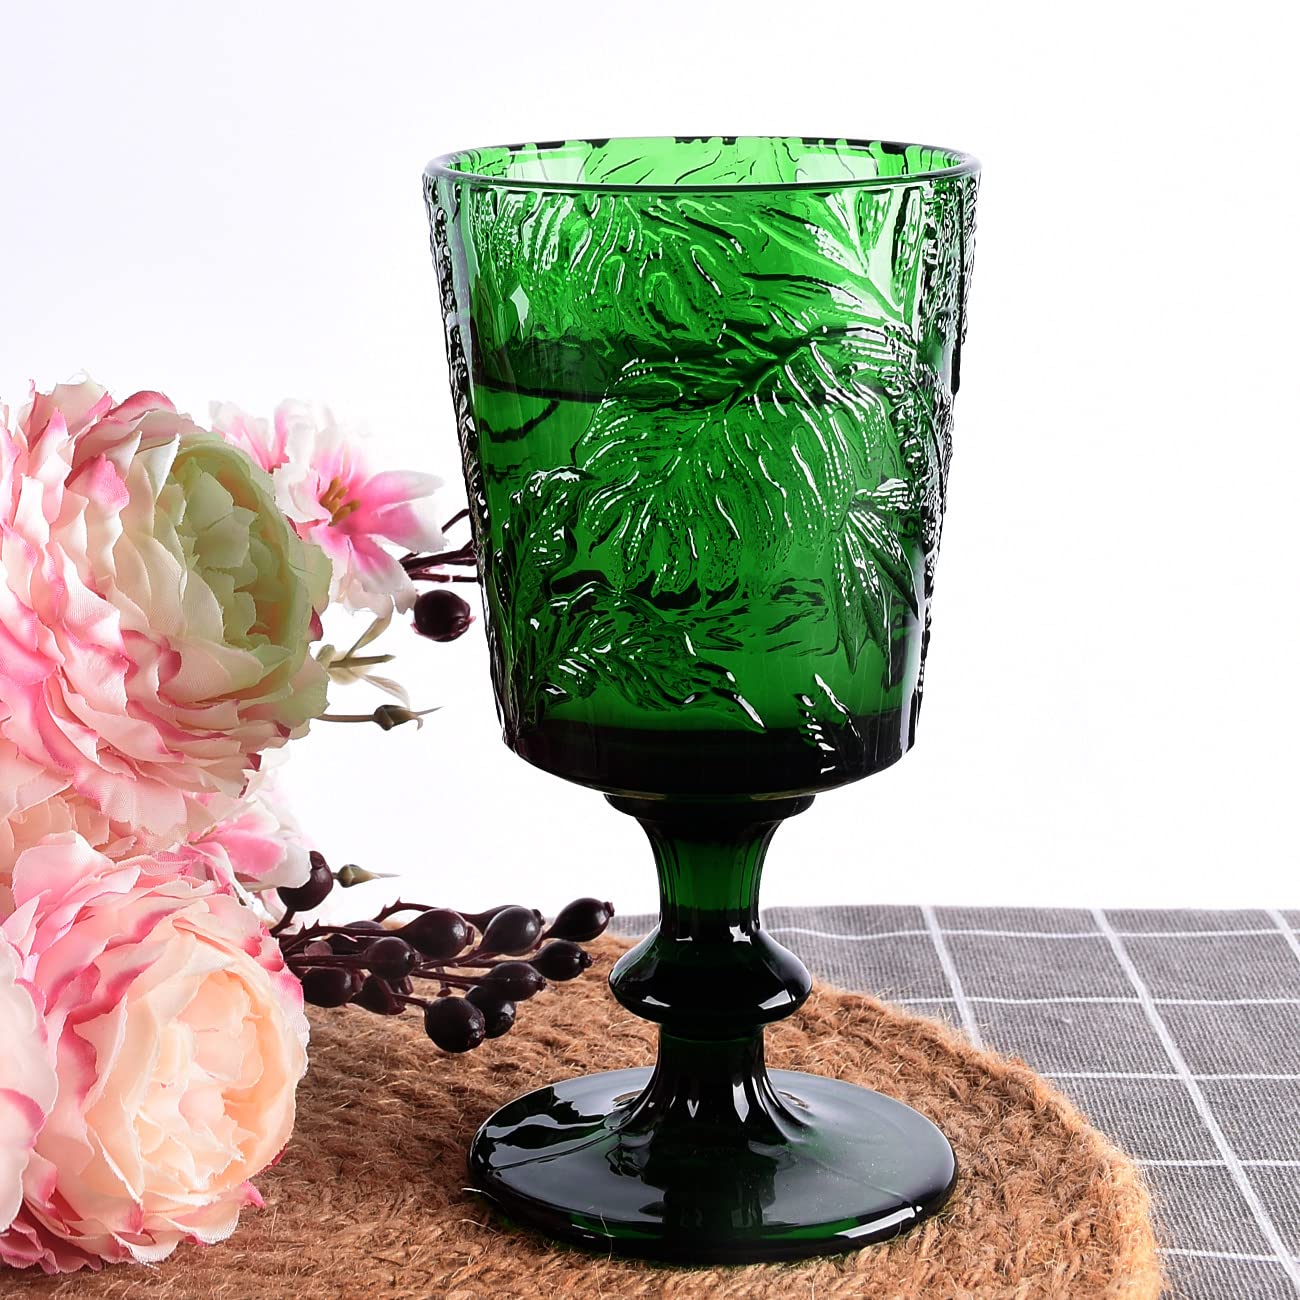 Jomop Handmade Pressed Colored Stemmed Wine Glasses Set Green Set of 4 Retro (4, Wine Goblet)